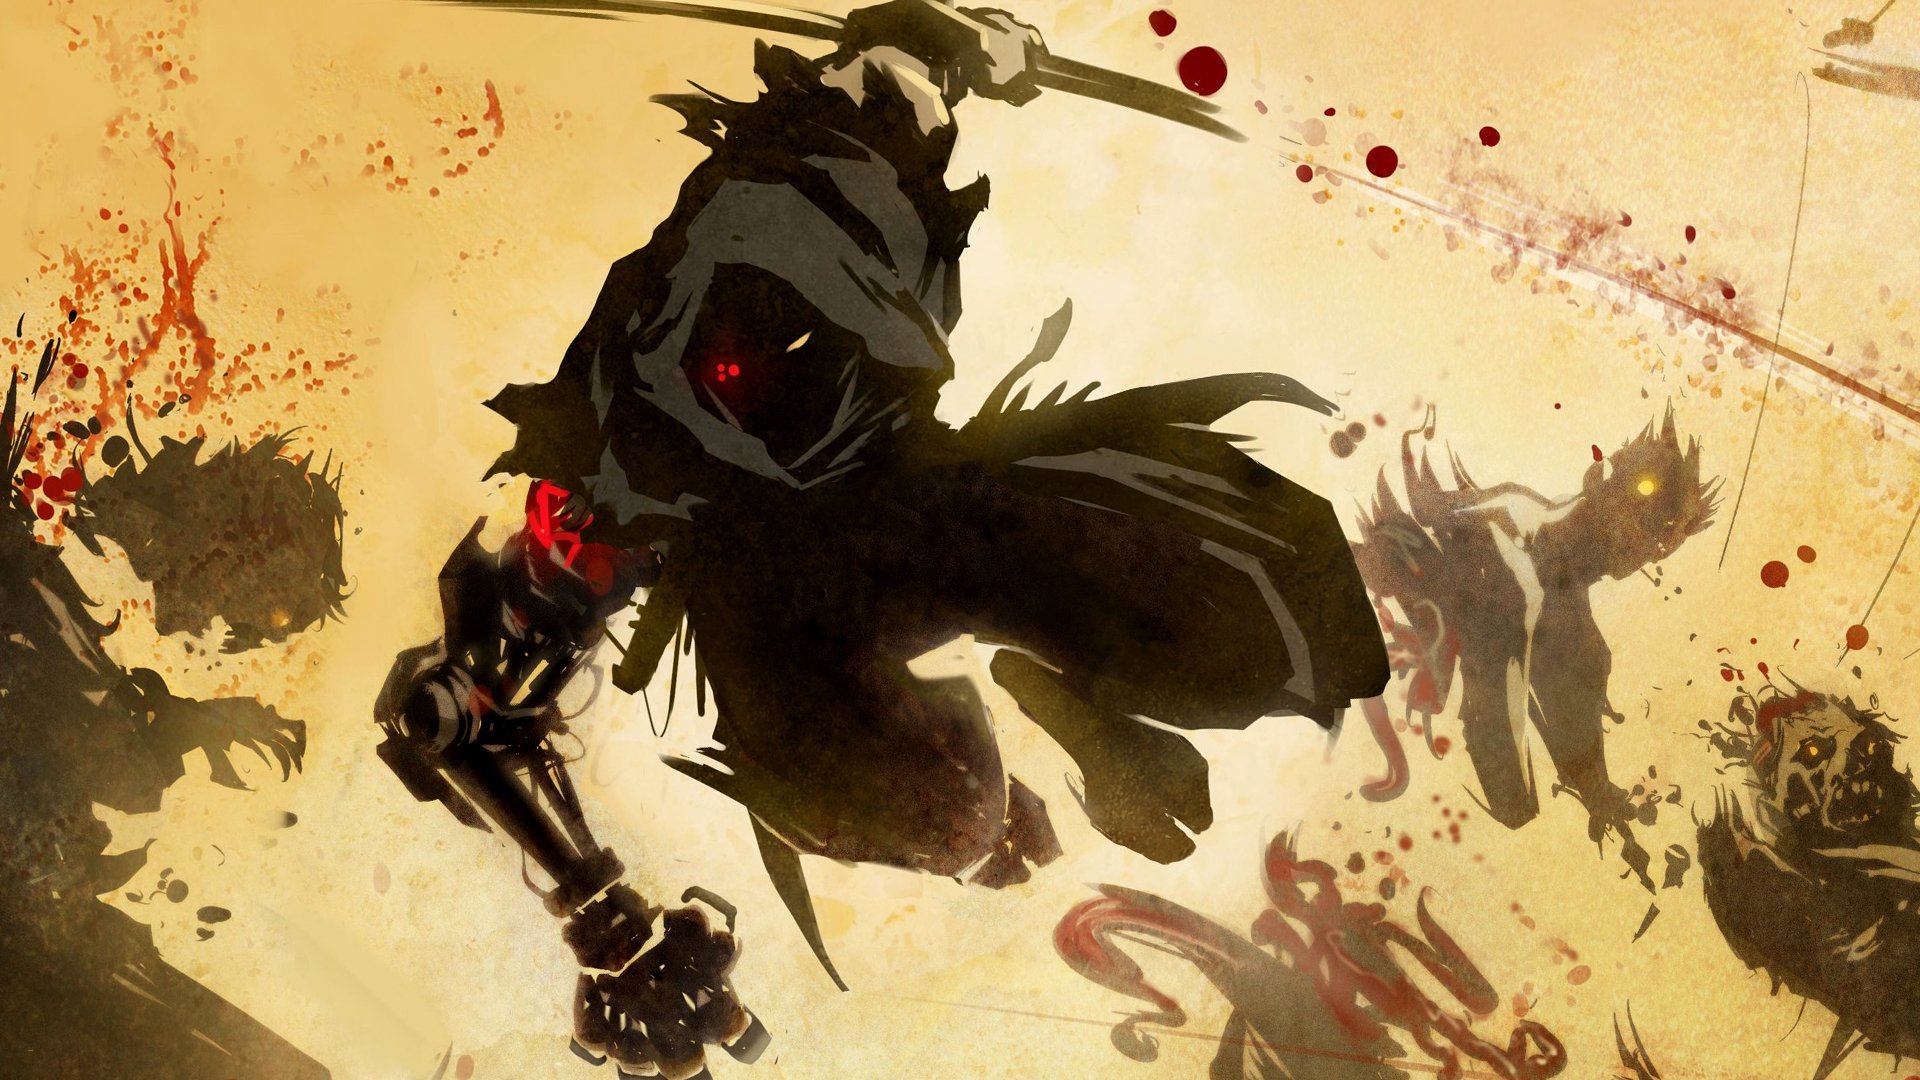 Yaiba: Ninja Gaiden Z Full HD Wallpaper and Background Image